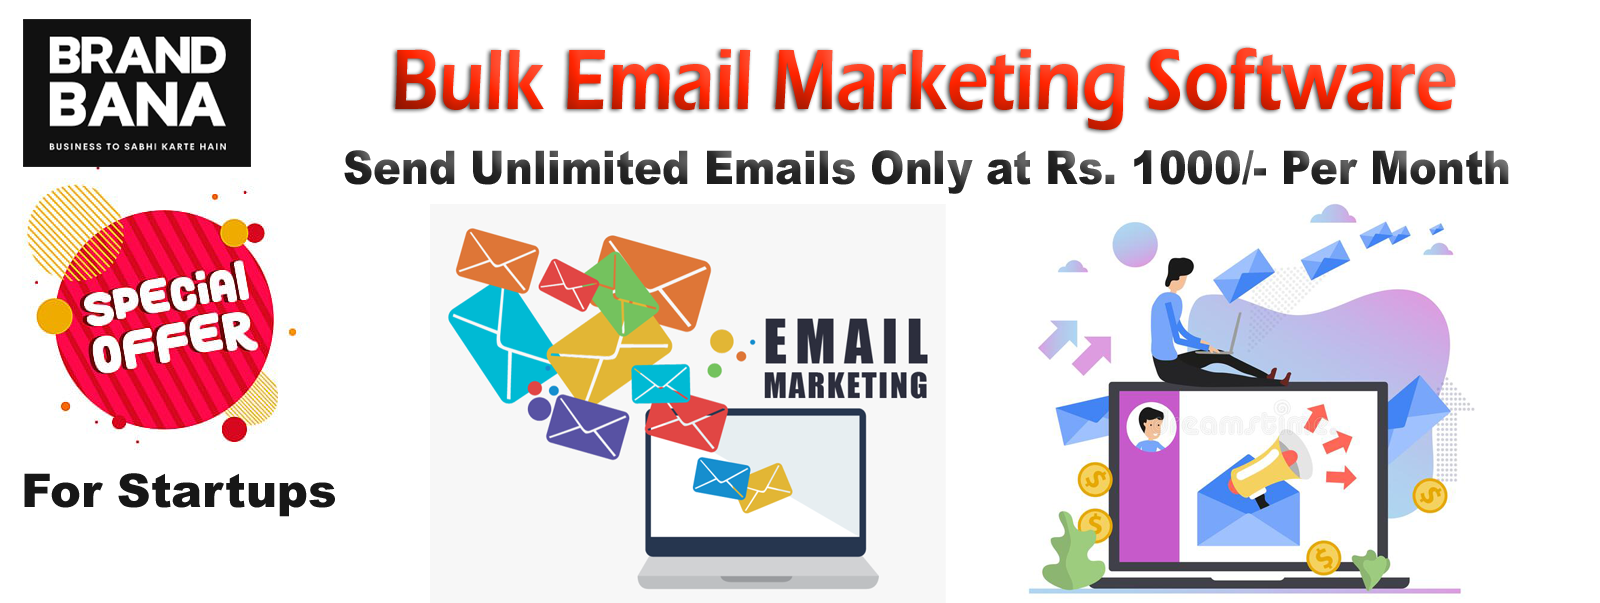 Bulk Email Marketing Software